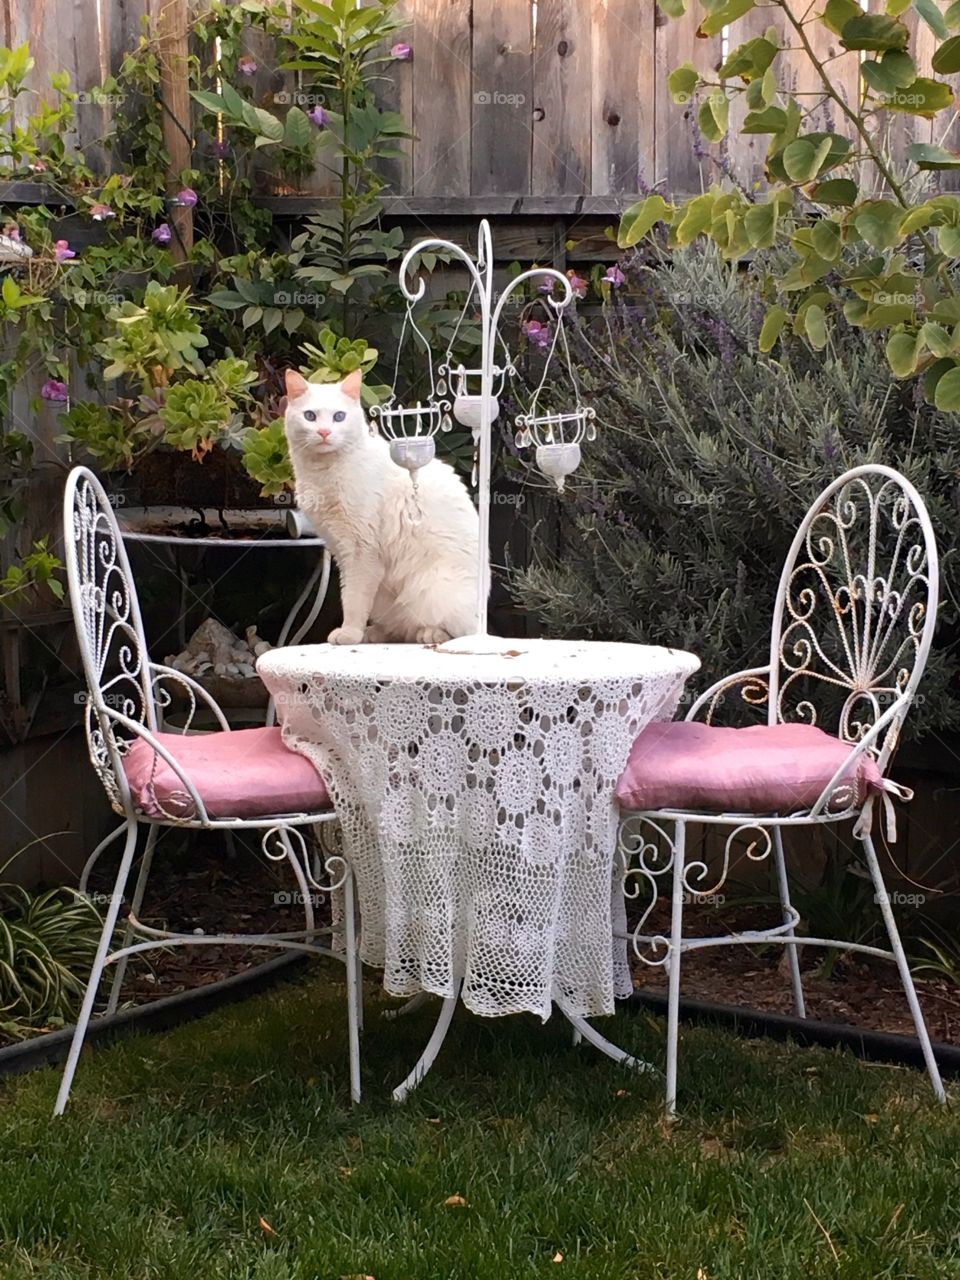 Garden kitty cat ready for a tea party.  